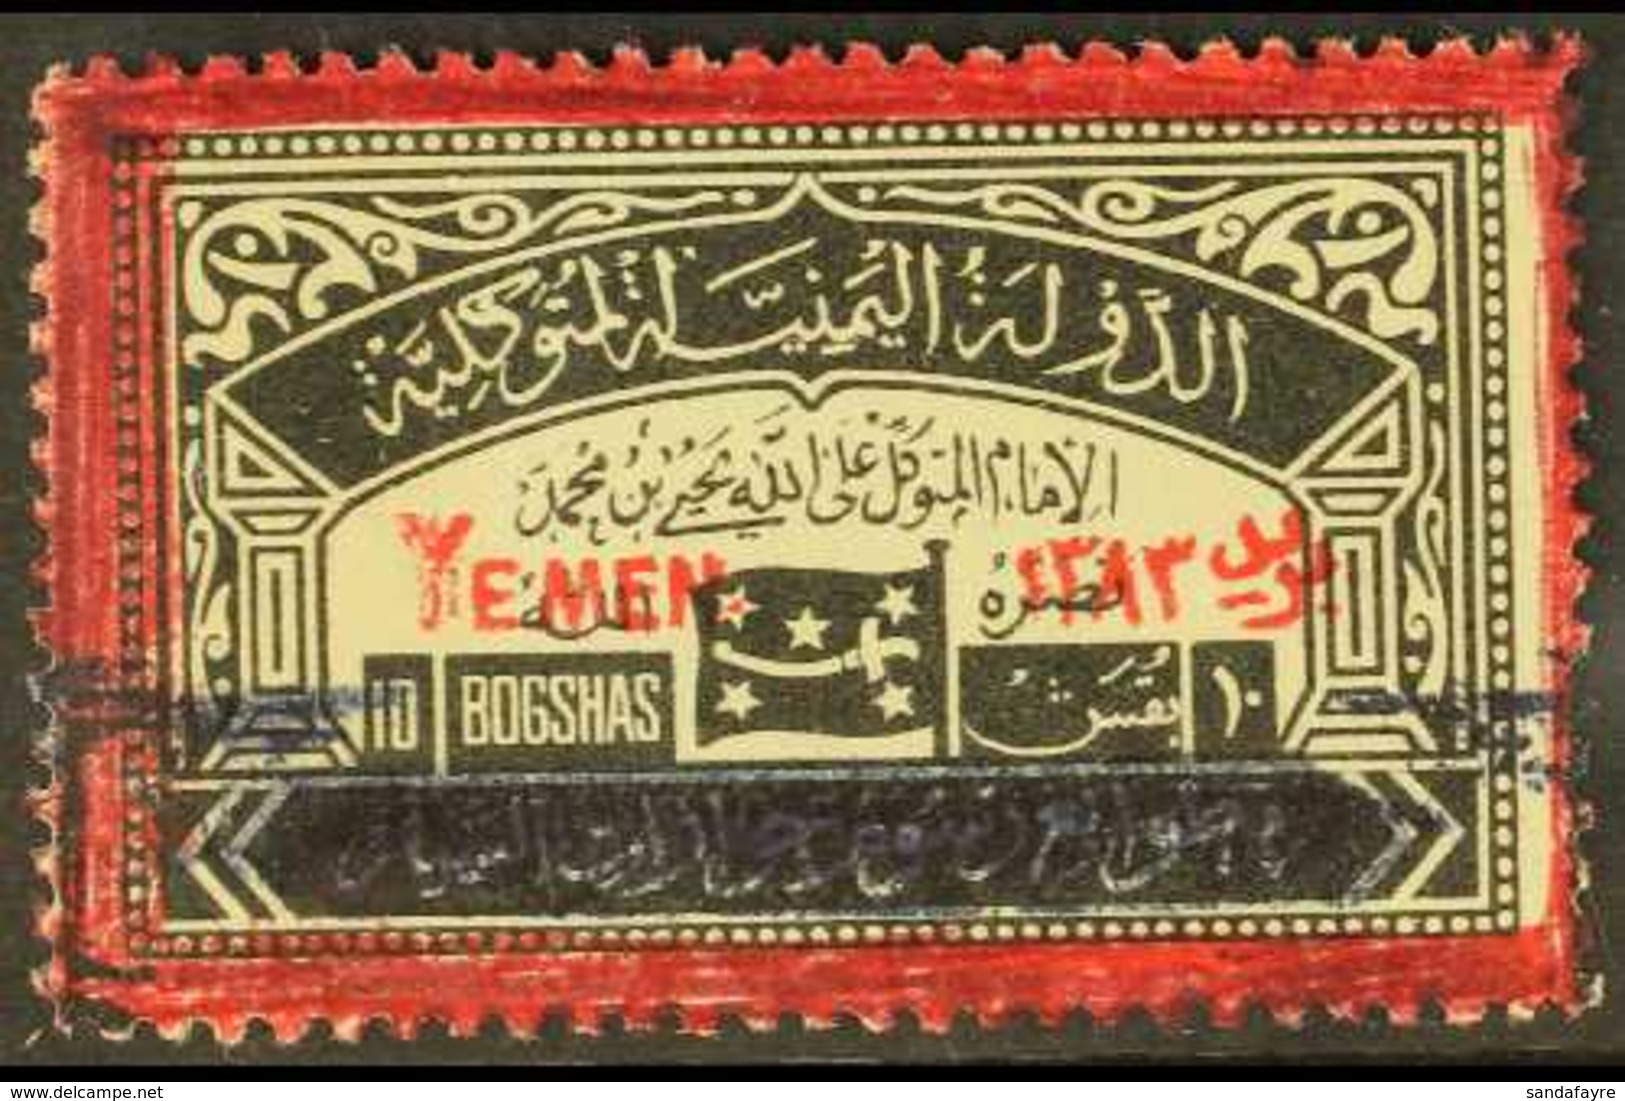 ROYALIST CIVIL WAR ISSUES 1963 10b Black And Carmine, Consular Stamp Overprinted "Yemen" And "Postage 1383" In Carmine,  - Yemen